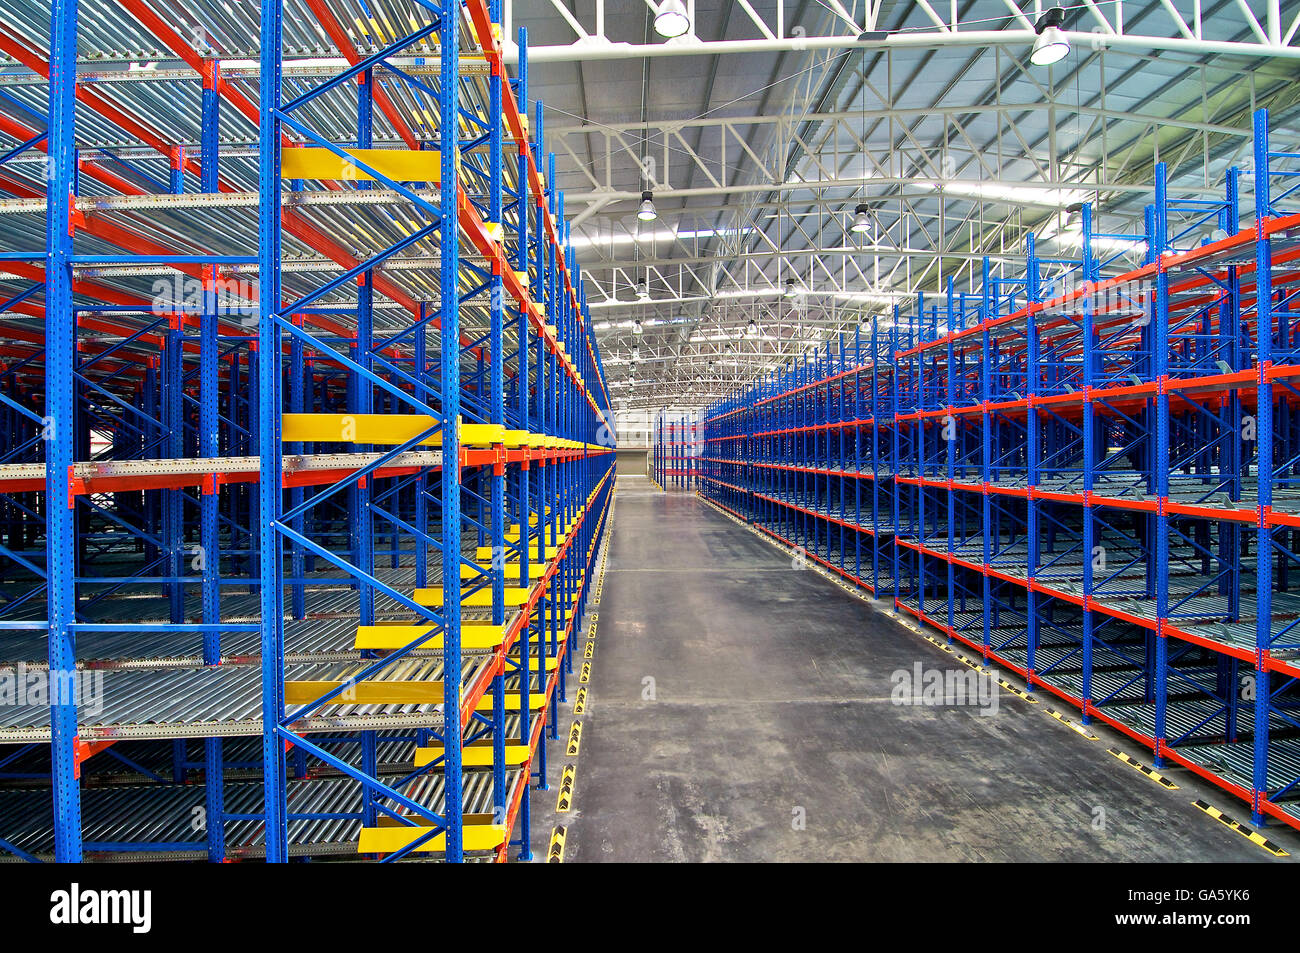 Warehouse storage, shelving metal, pallet racking systems Stock Photo